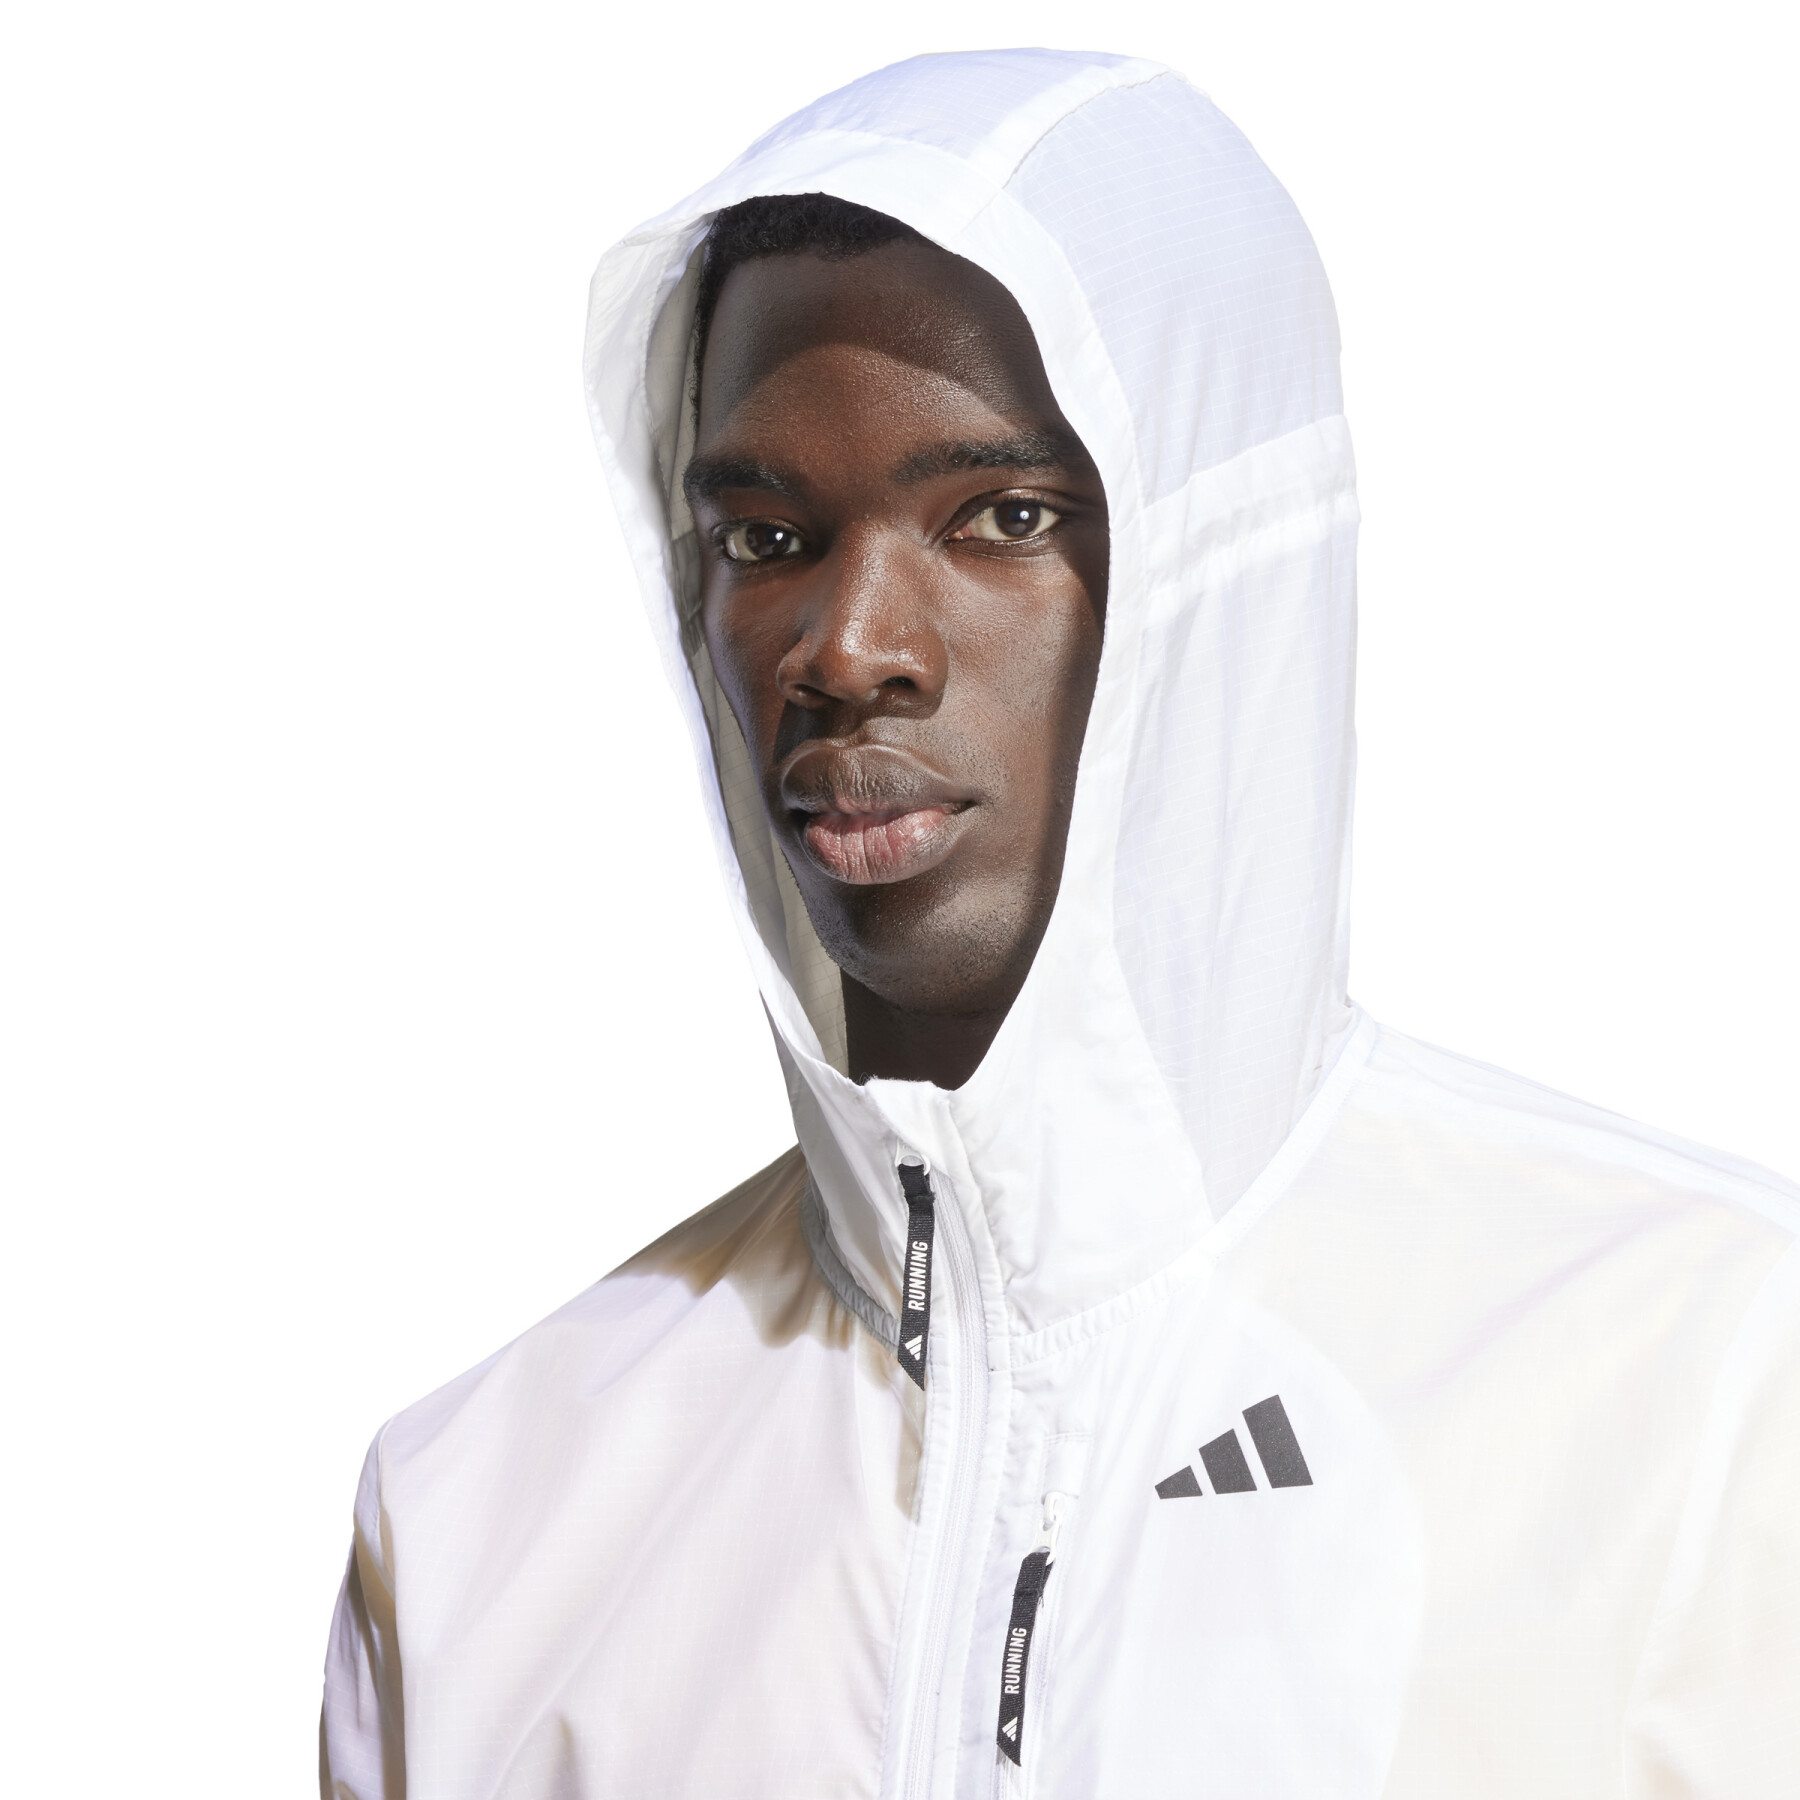 Waterproof jacket adidas Own the Run 3 Stripes